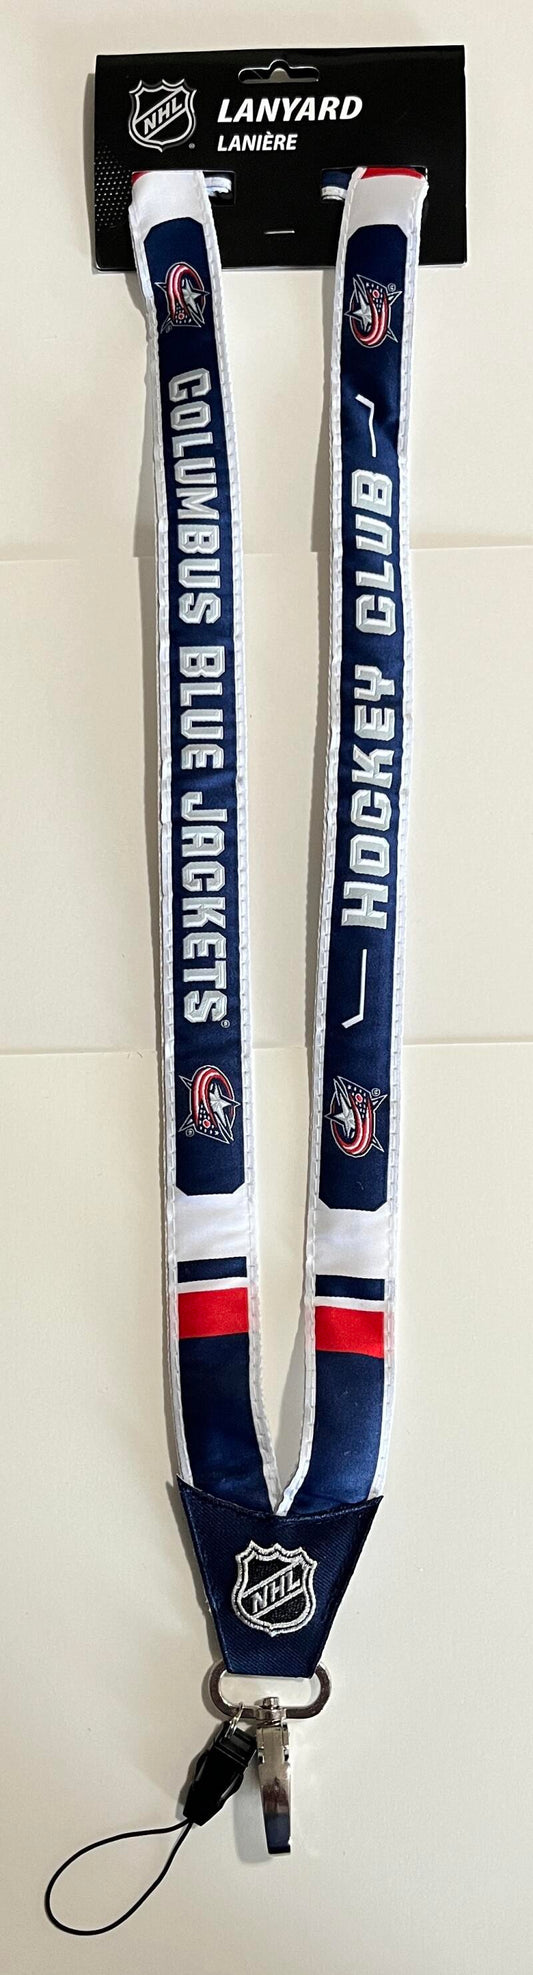 Columbus Blue Jackets Woven Licensed NHL Hockey Lanyard Metal Clasp Image 1